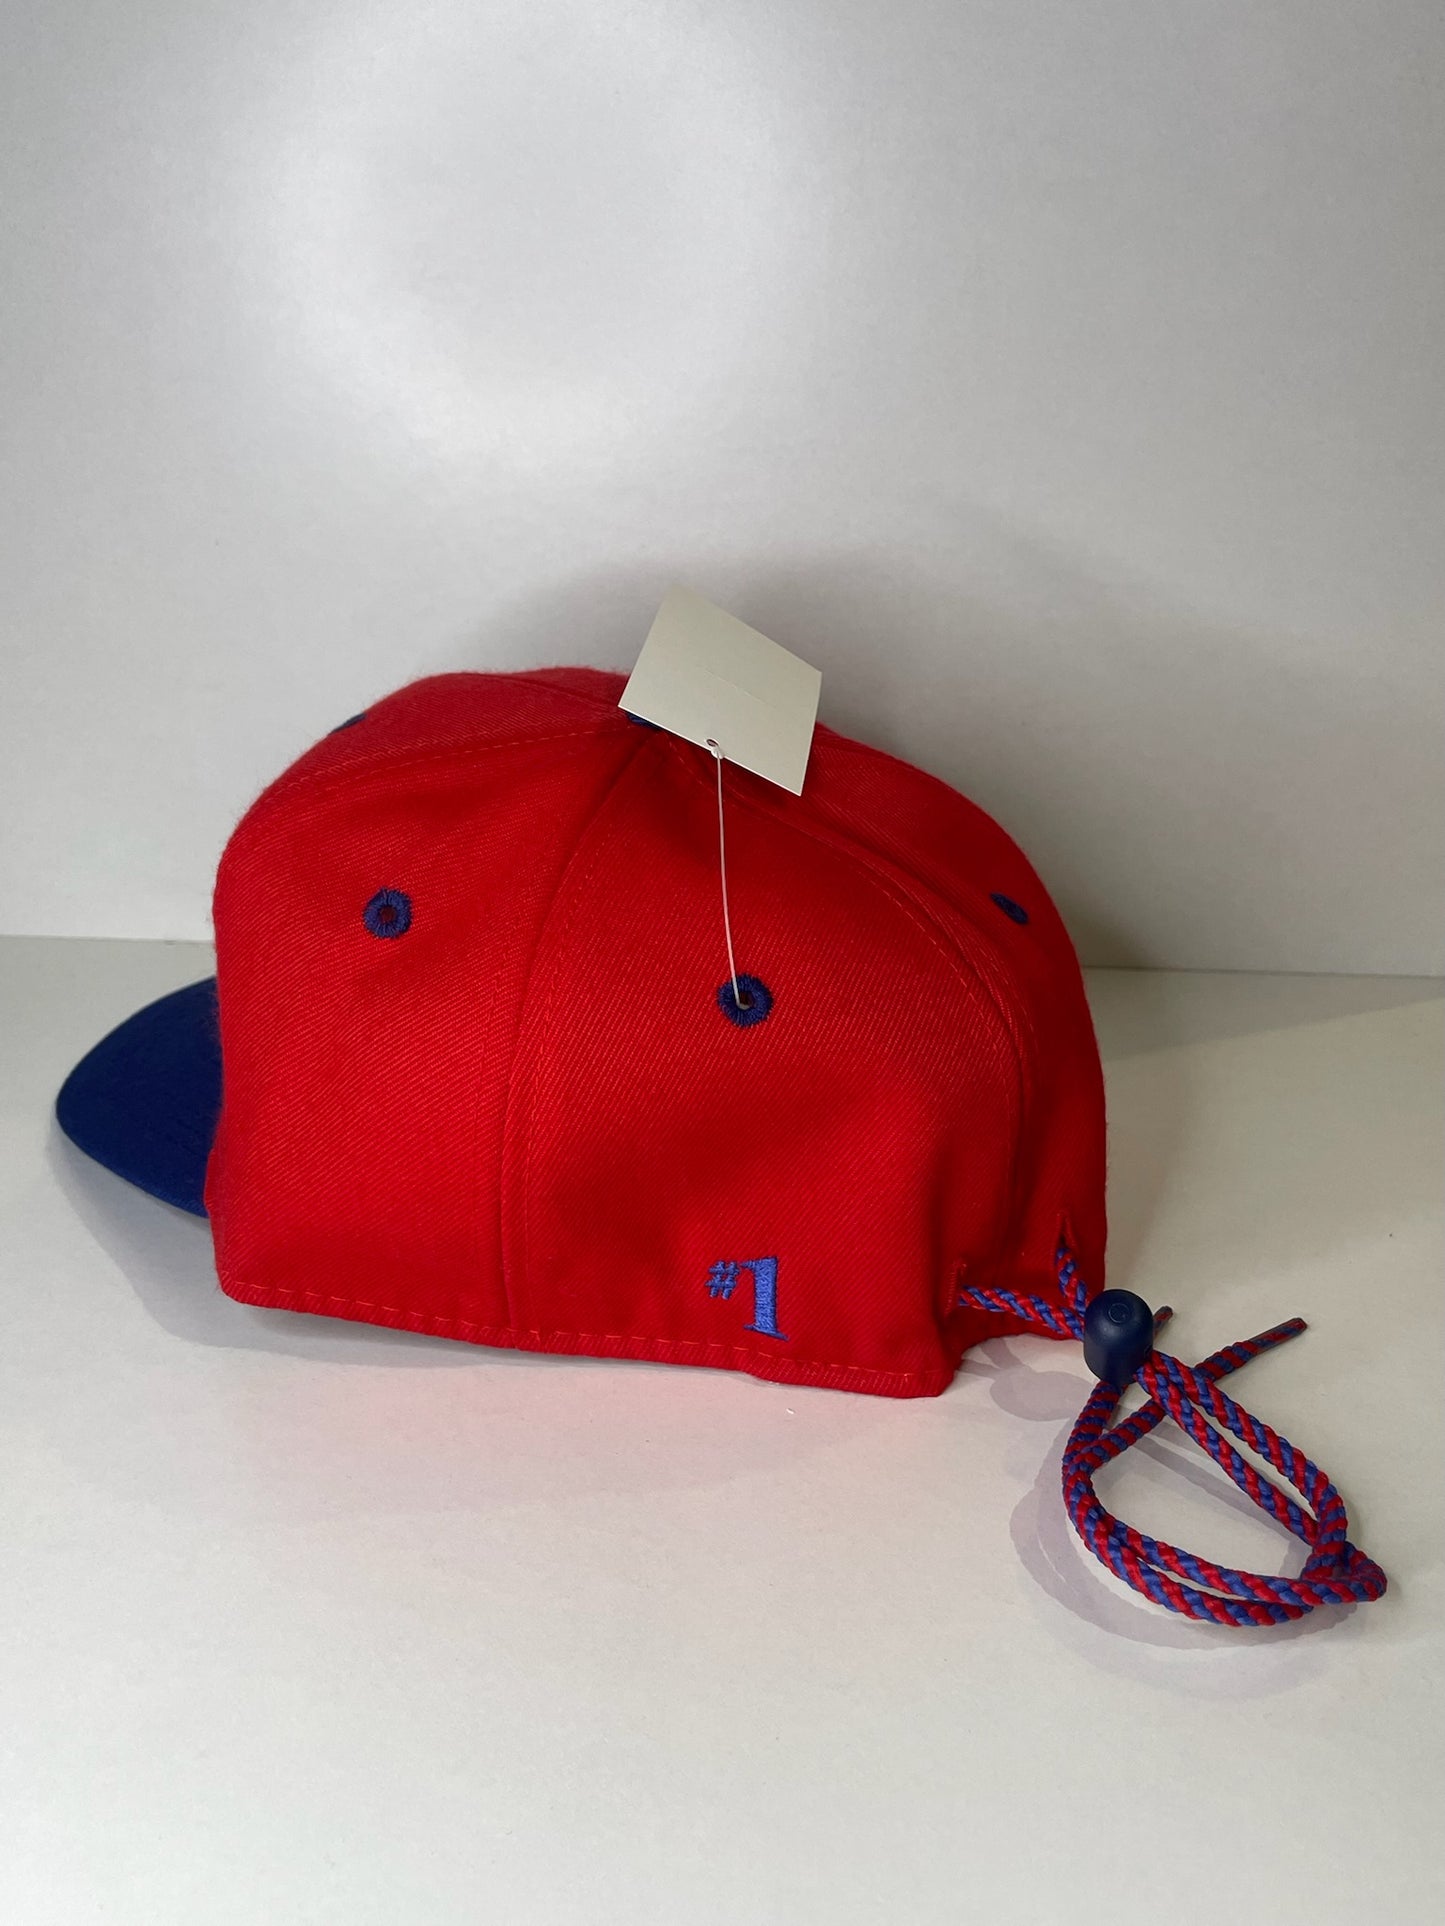 VINTAGE 90s WASHINGTON CAPITALS #1 APPAREL DRAWSTRING CAP HAT